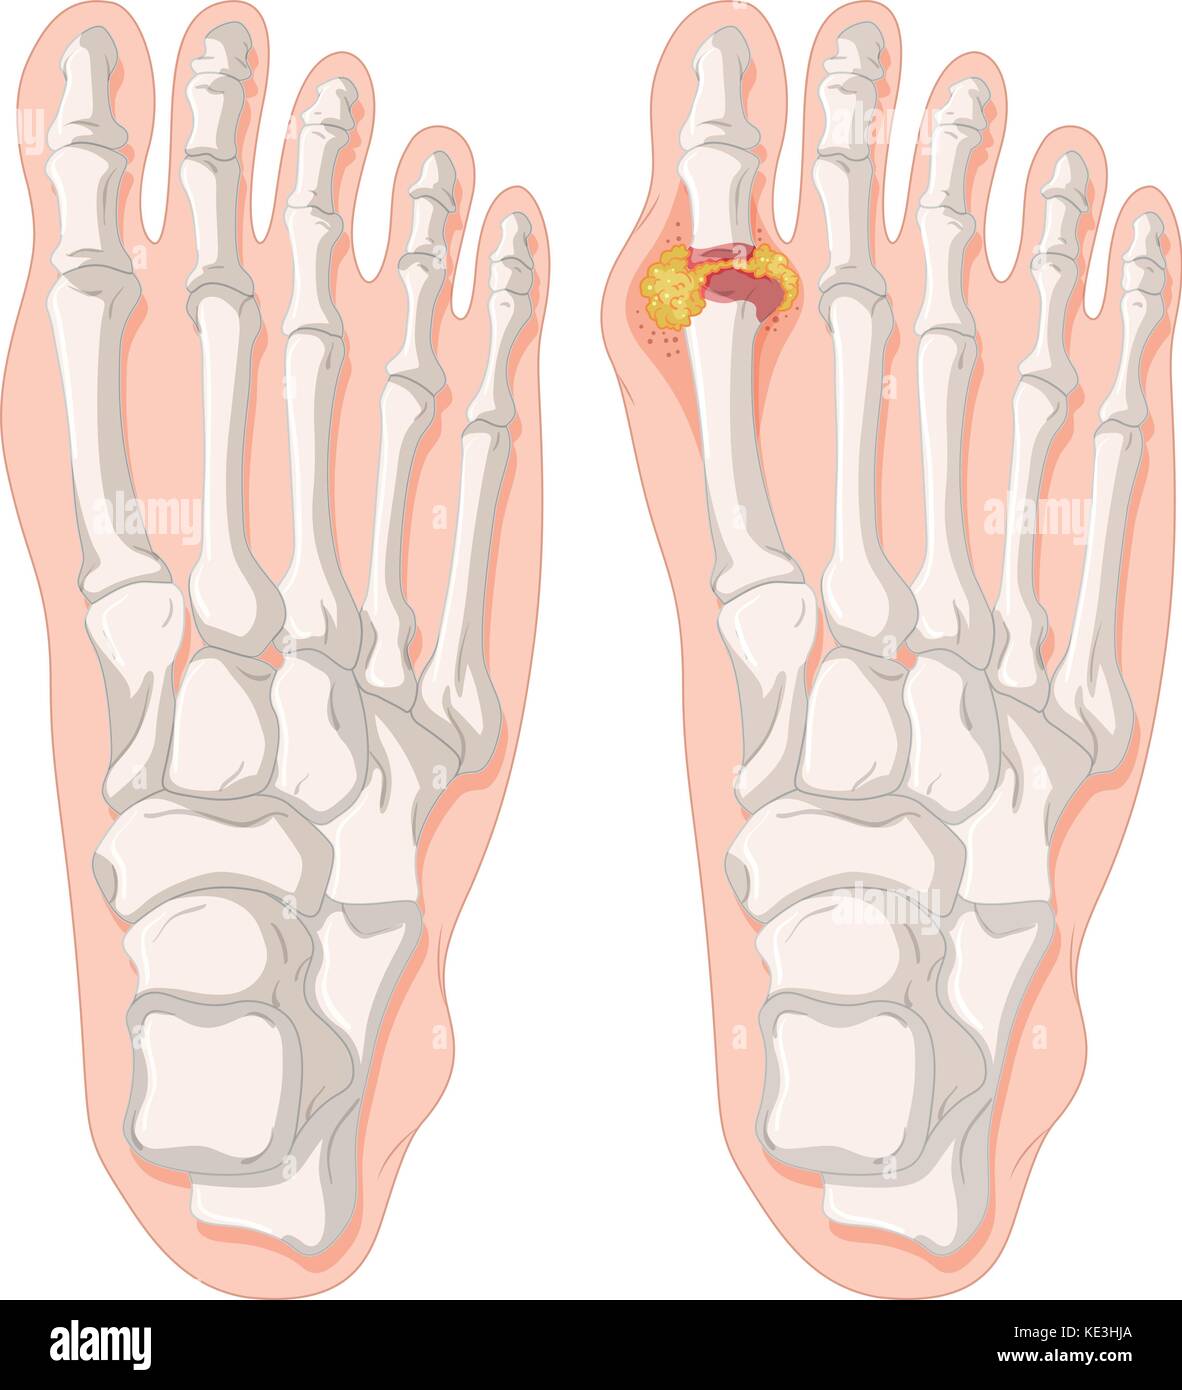 Gout toe in human feet illustration Stock Vector